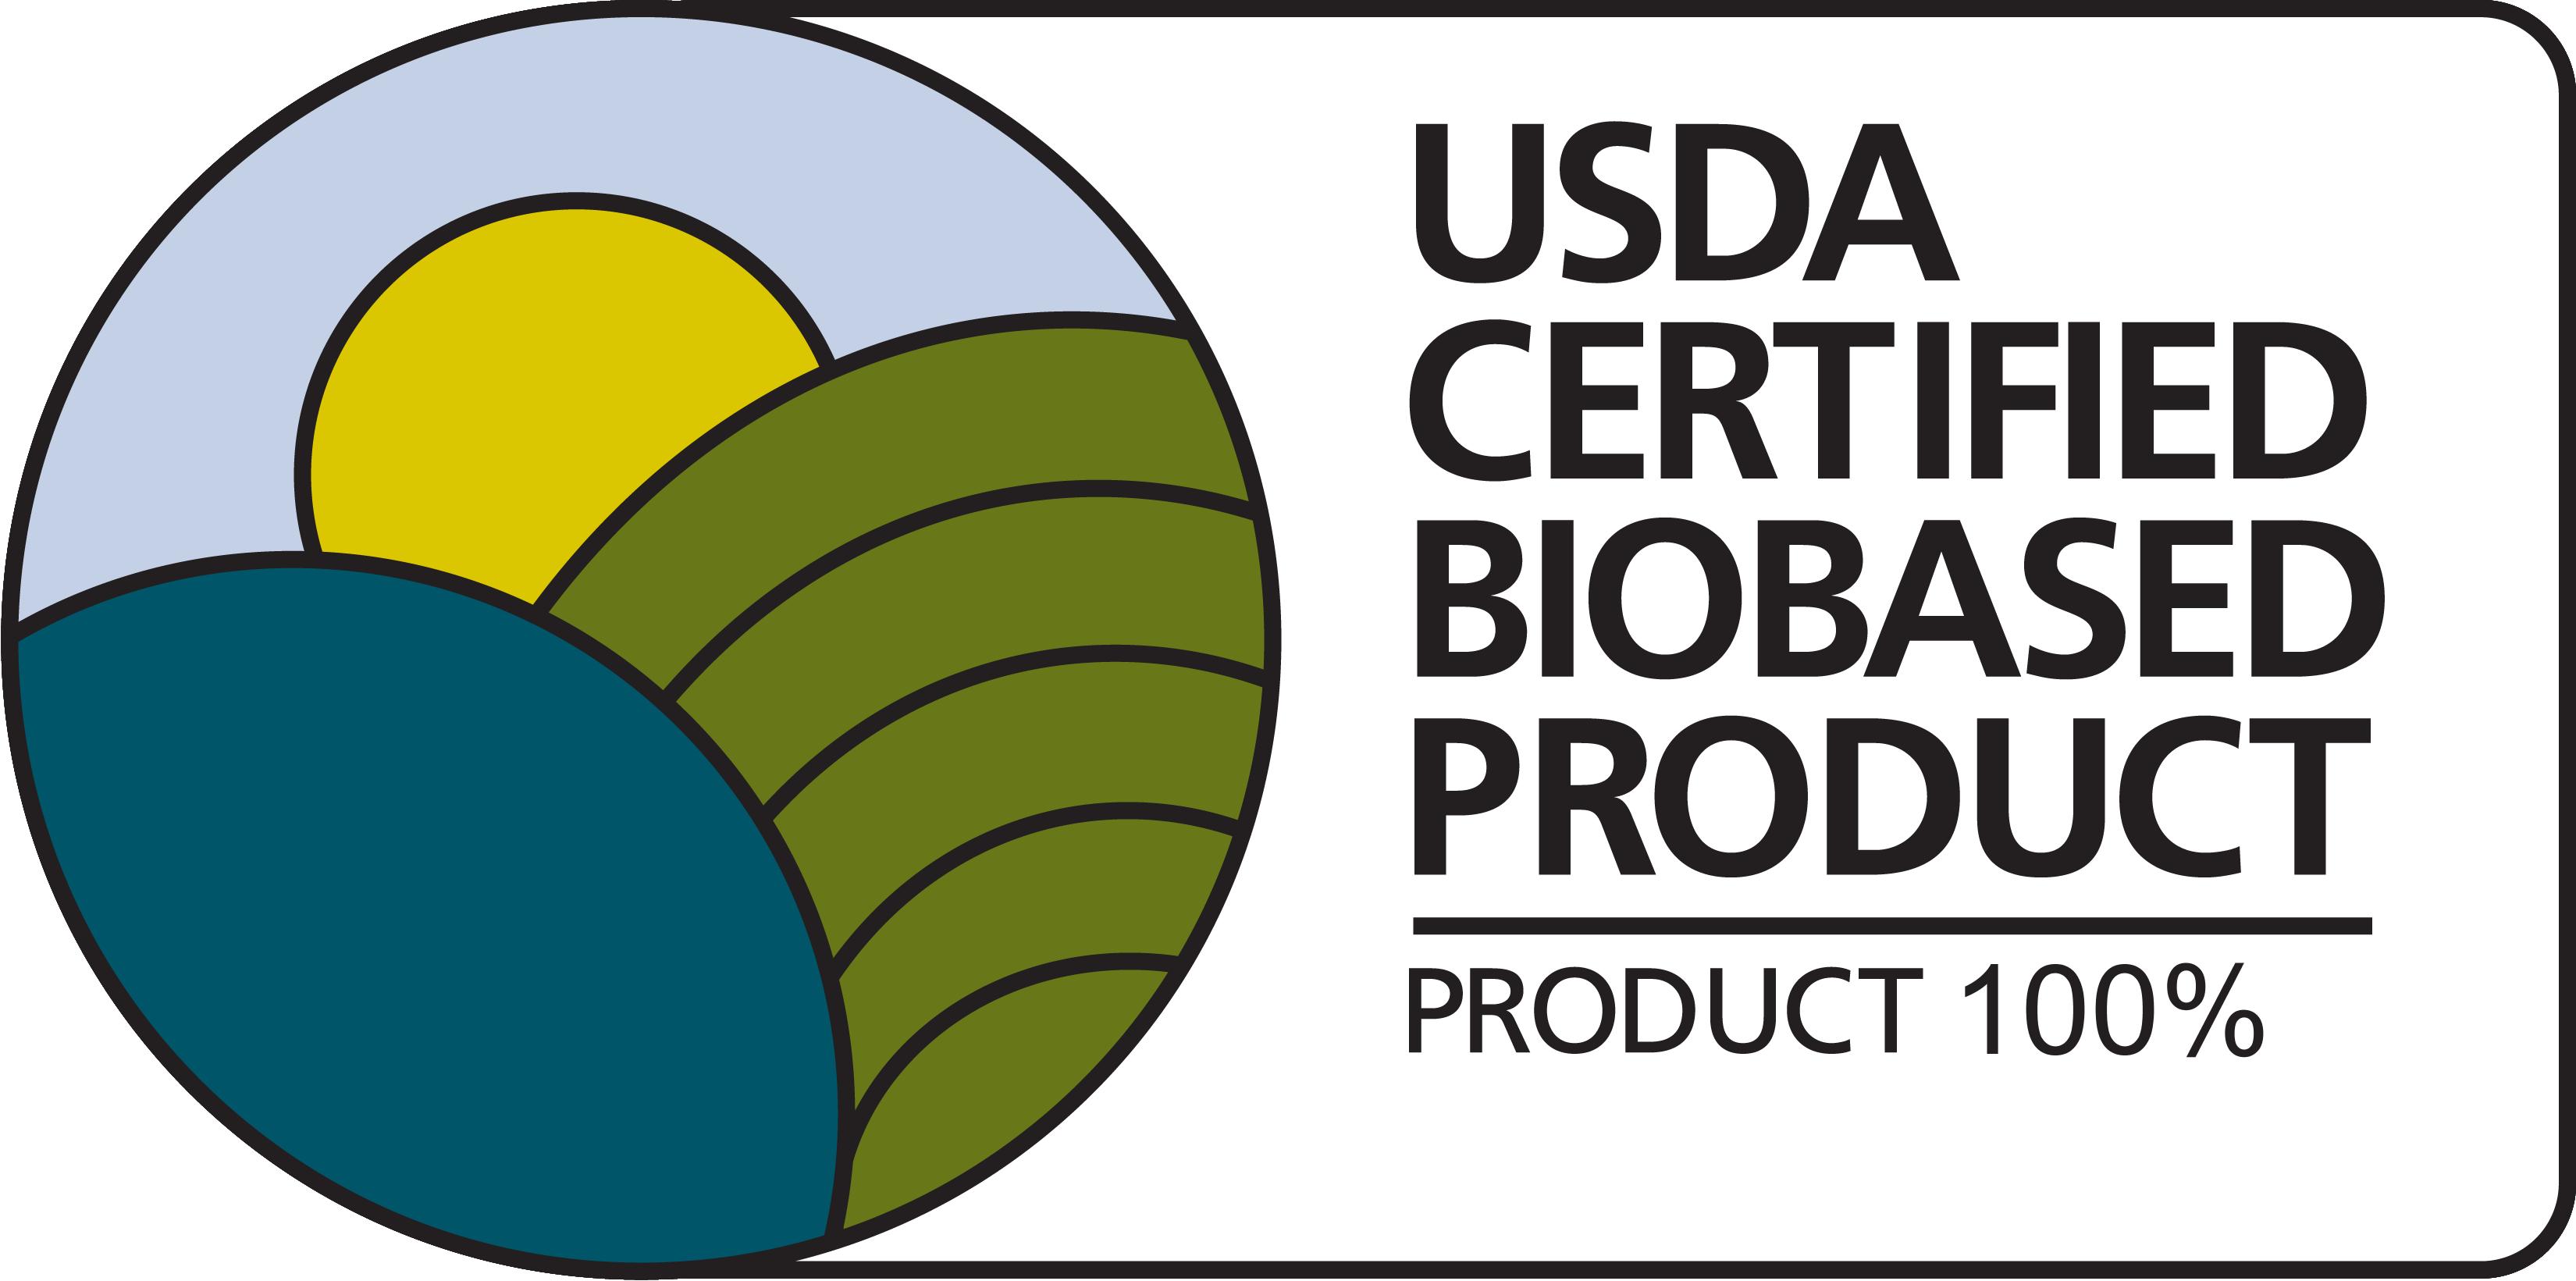 USDA Certified Biobased Product seal logo